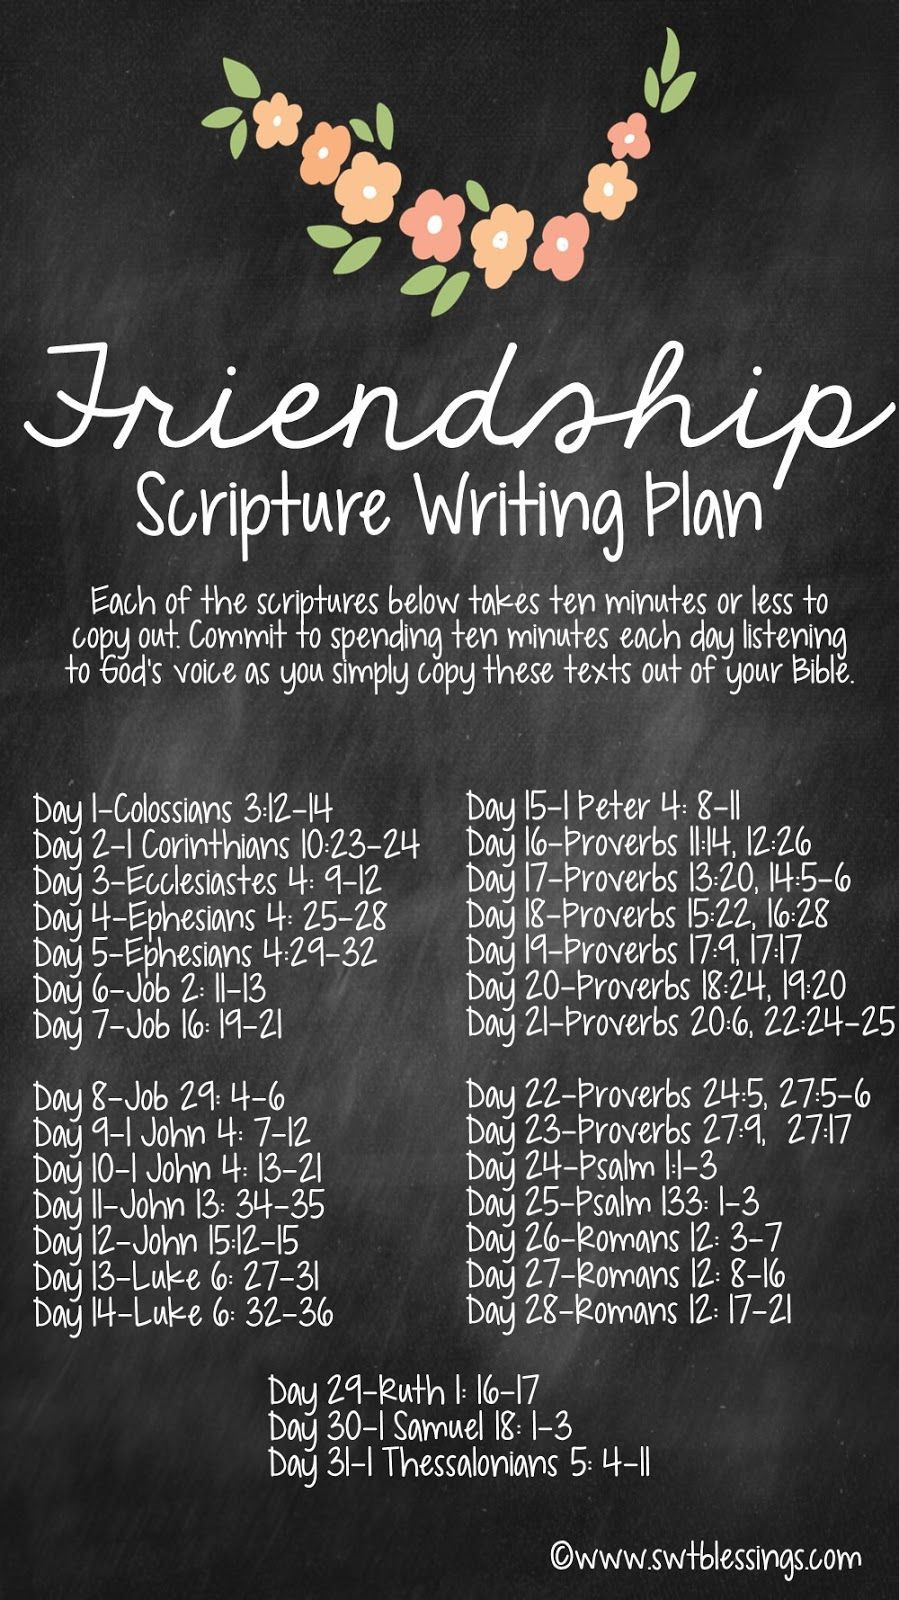 Bible Quotes About Friendship
 Best 25 Friendship scripture ideas on Pinterest